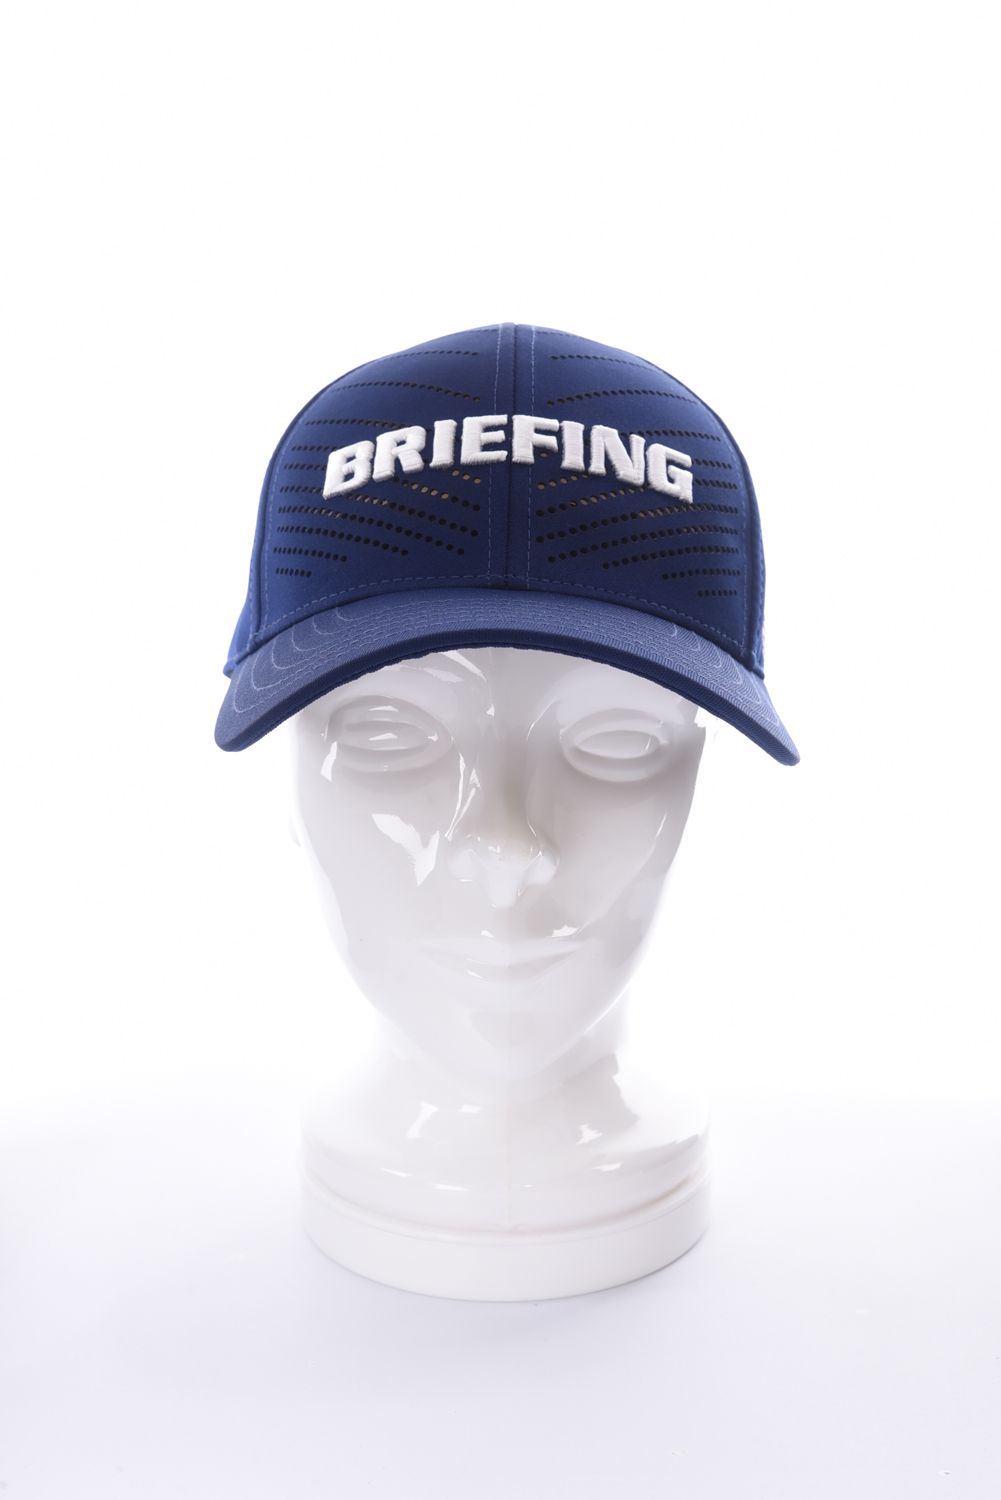 BRIEFING - MENS PUNCHING MESH CAP / ロゴ刺繍 パンチングメッシュ 